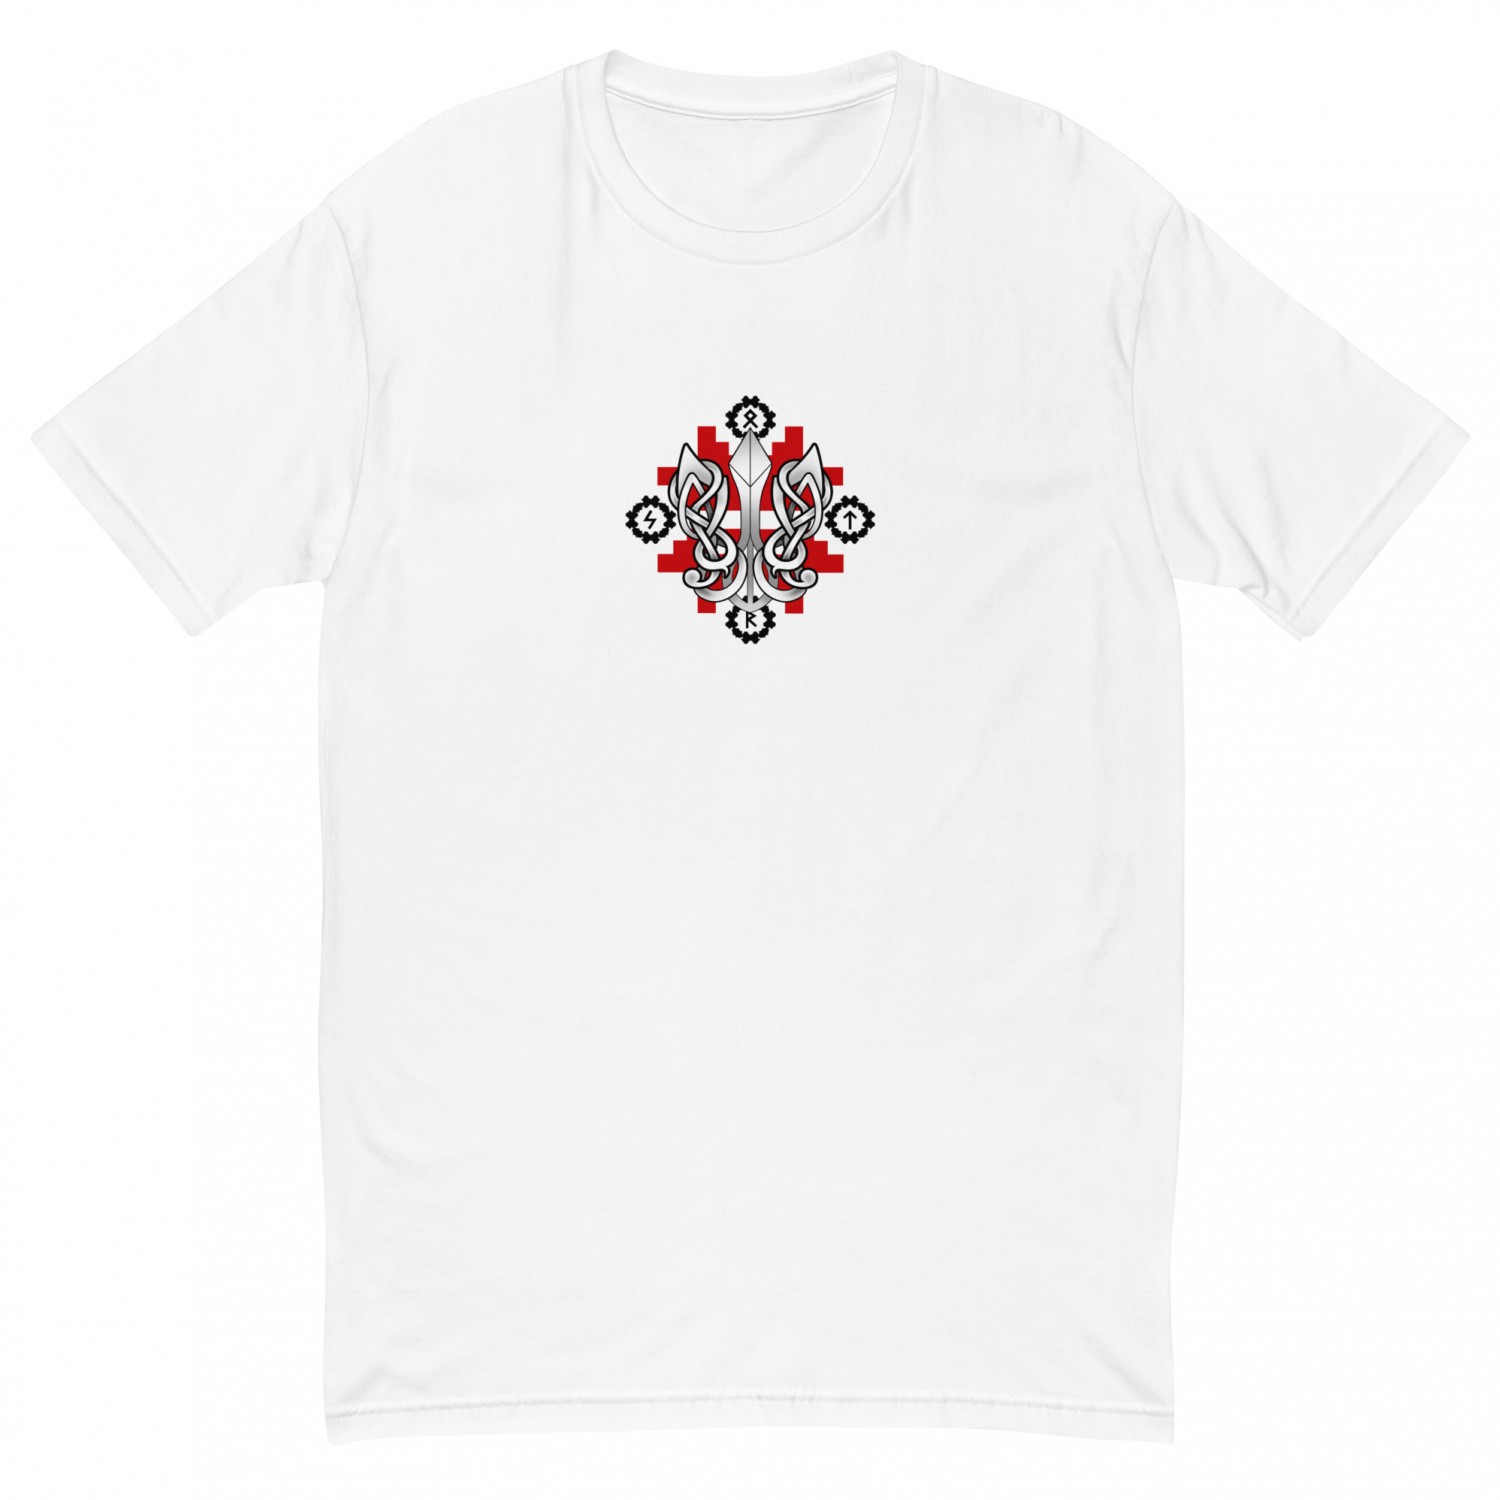 Kup koszulkę „Styl ukraiński”